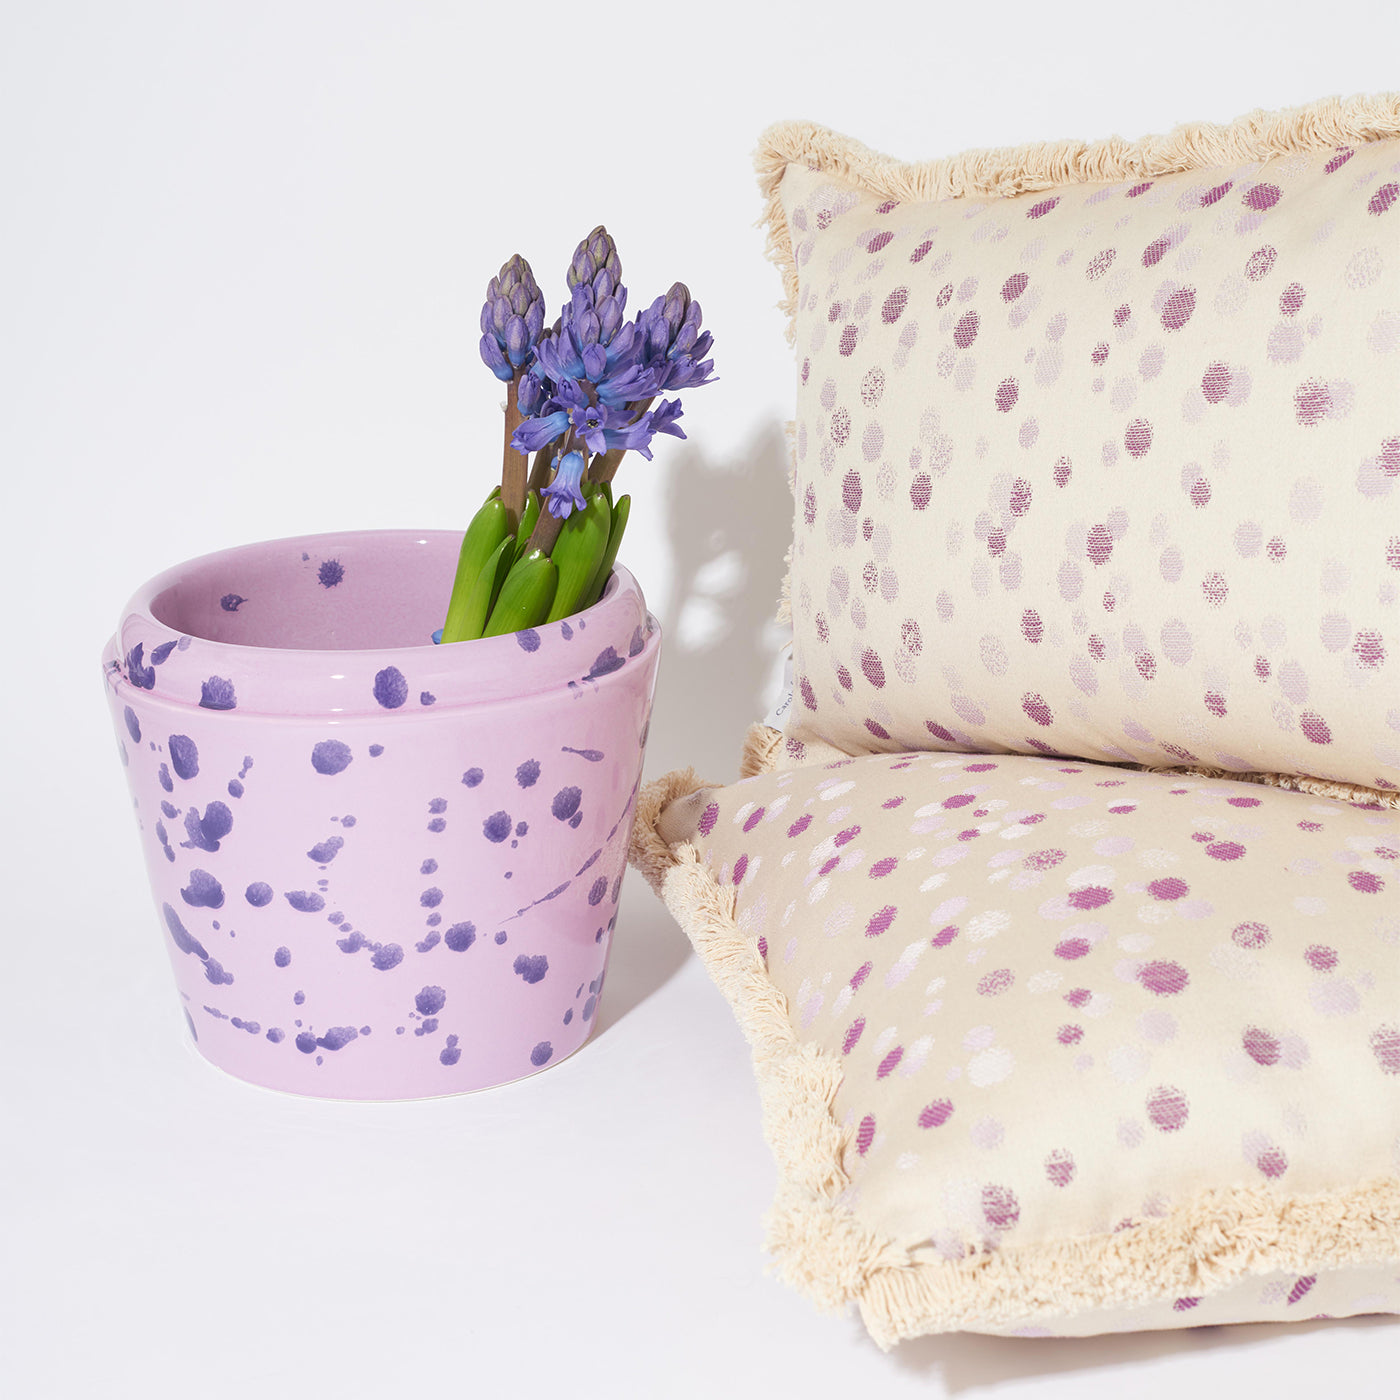 Lilac and Violet Ceramic Cachepot Vase - Alternative view 1